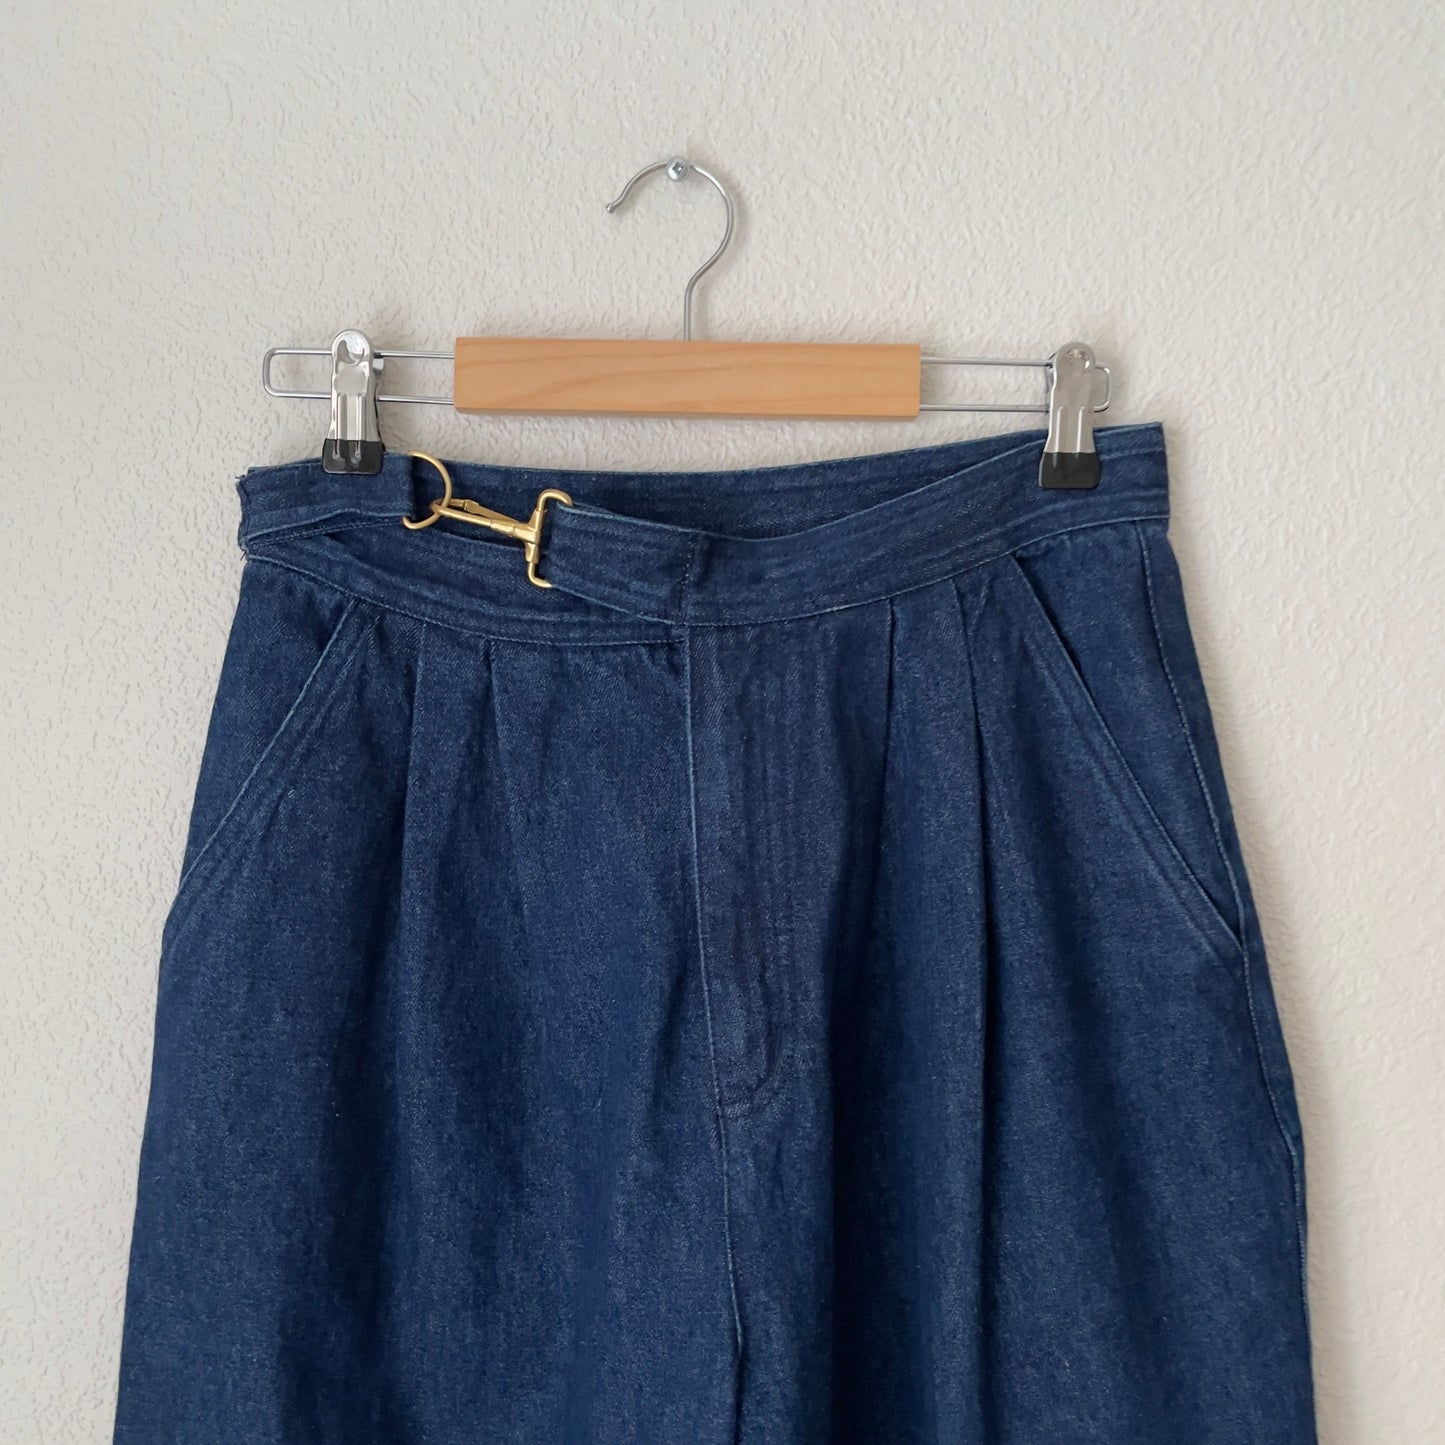 Vintage 80s Jeans - High Waist, Tapered Leg